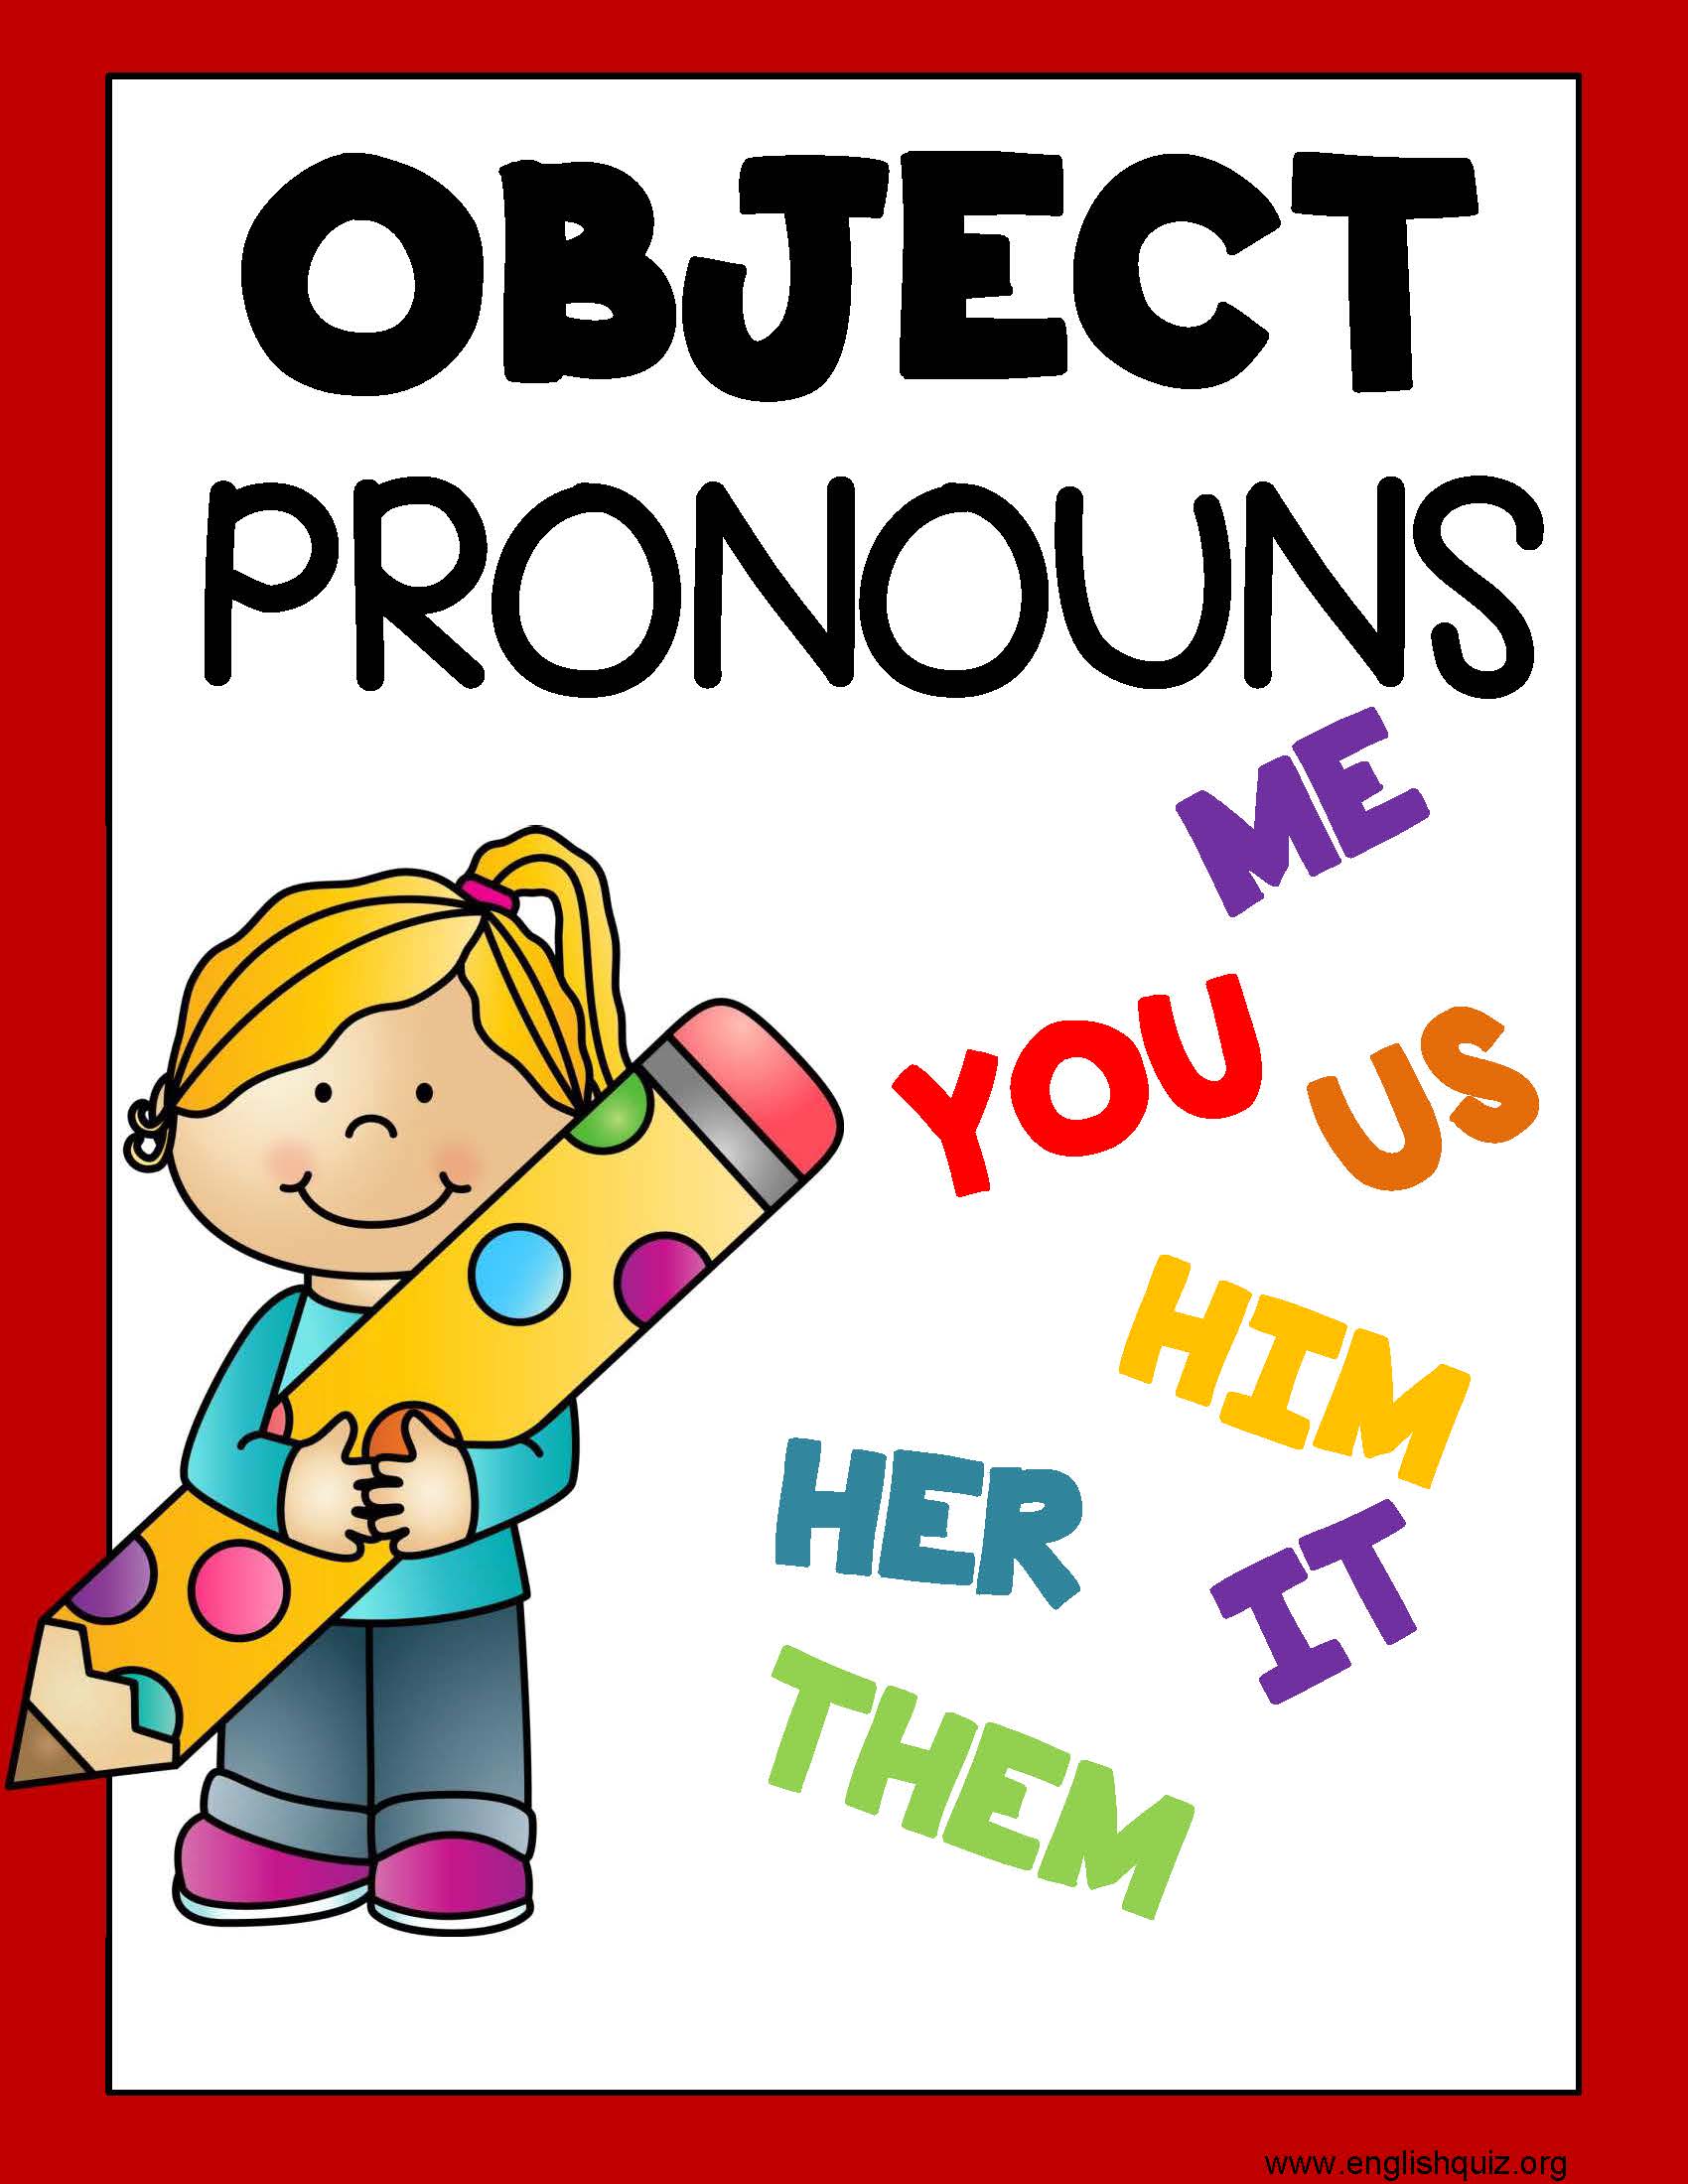 Personal object. Object pronouns. Object pronouns Wordwall. Pronouns надпись. Objection pronouns.